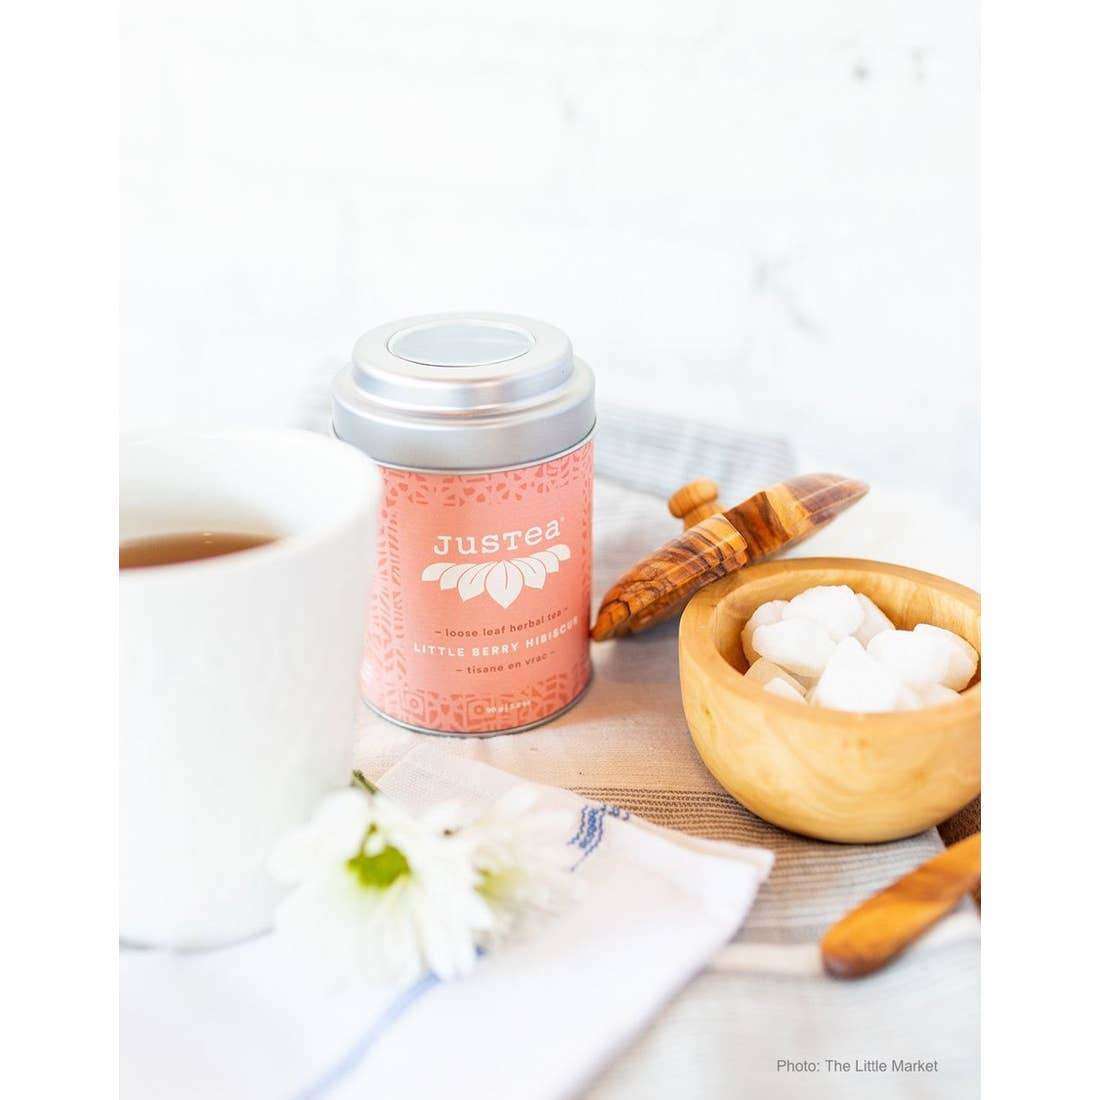 Jonesy Wood:Tea:Little Berry Hibiscus Tin with Spoon